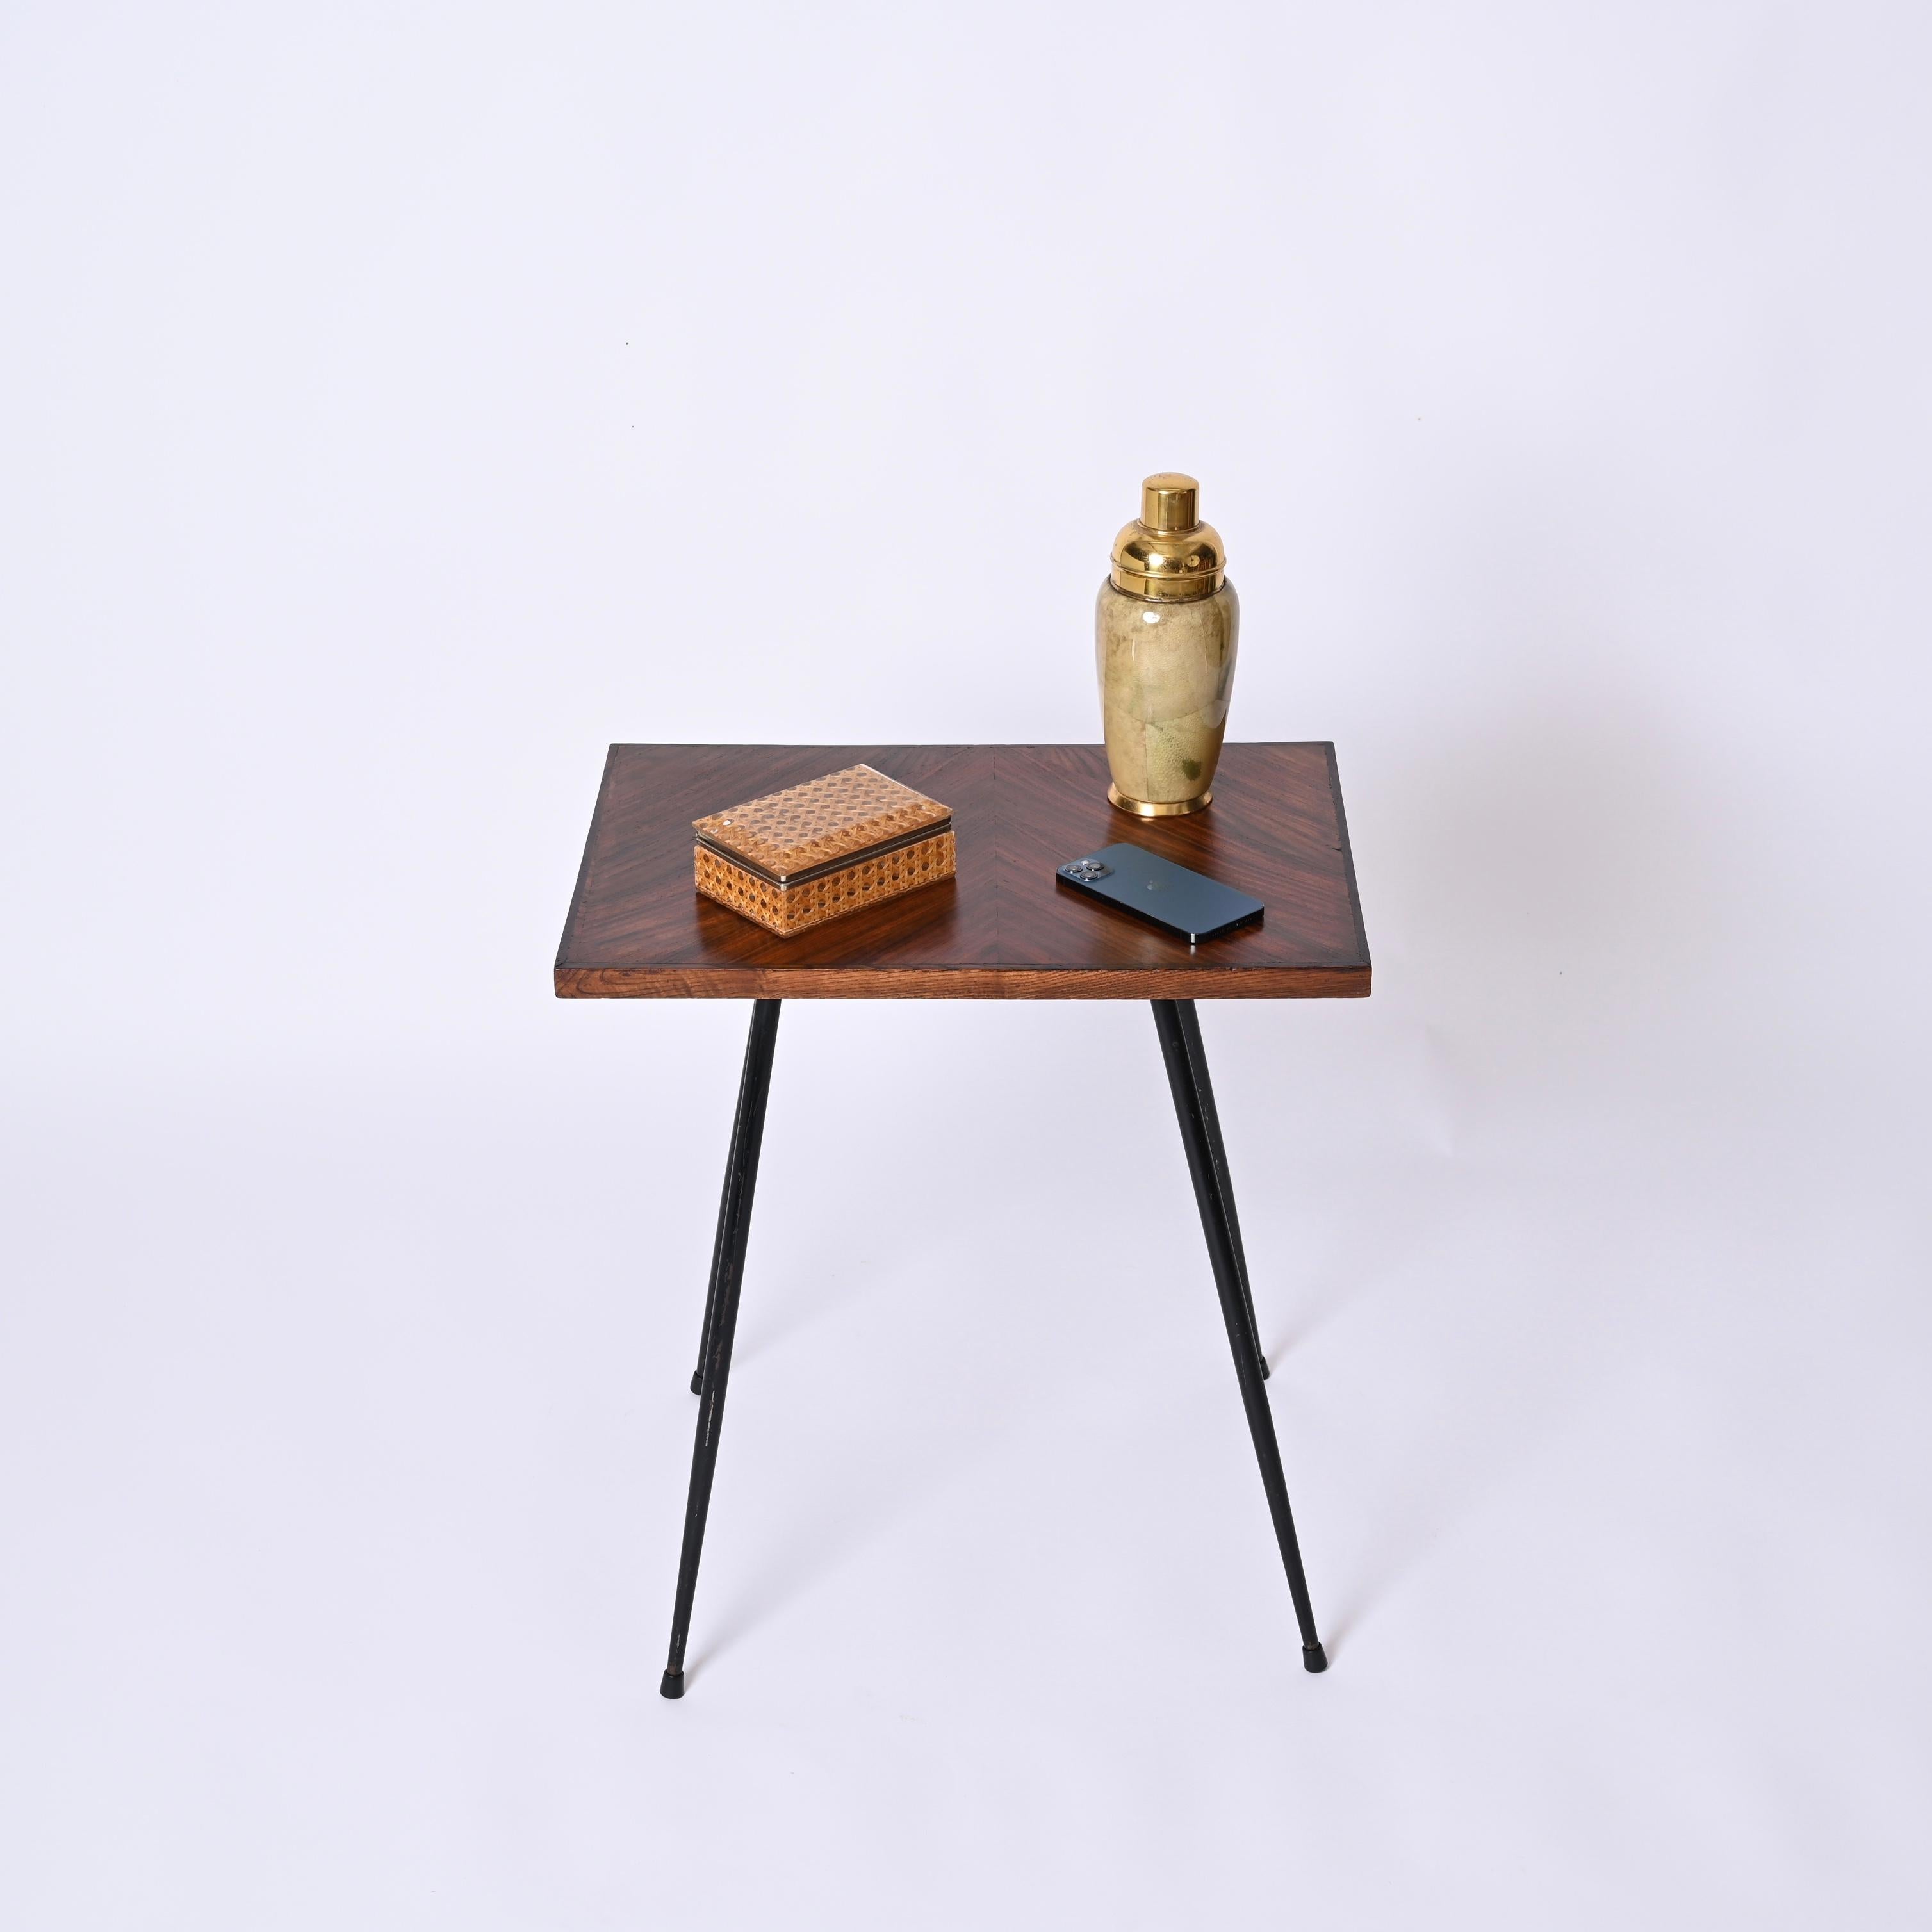 Italian Midcentury Rectangular Side Table in Teak Wood and Enameled Metal, 1950s For Sale 4